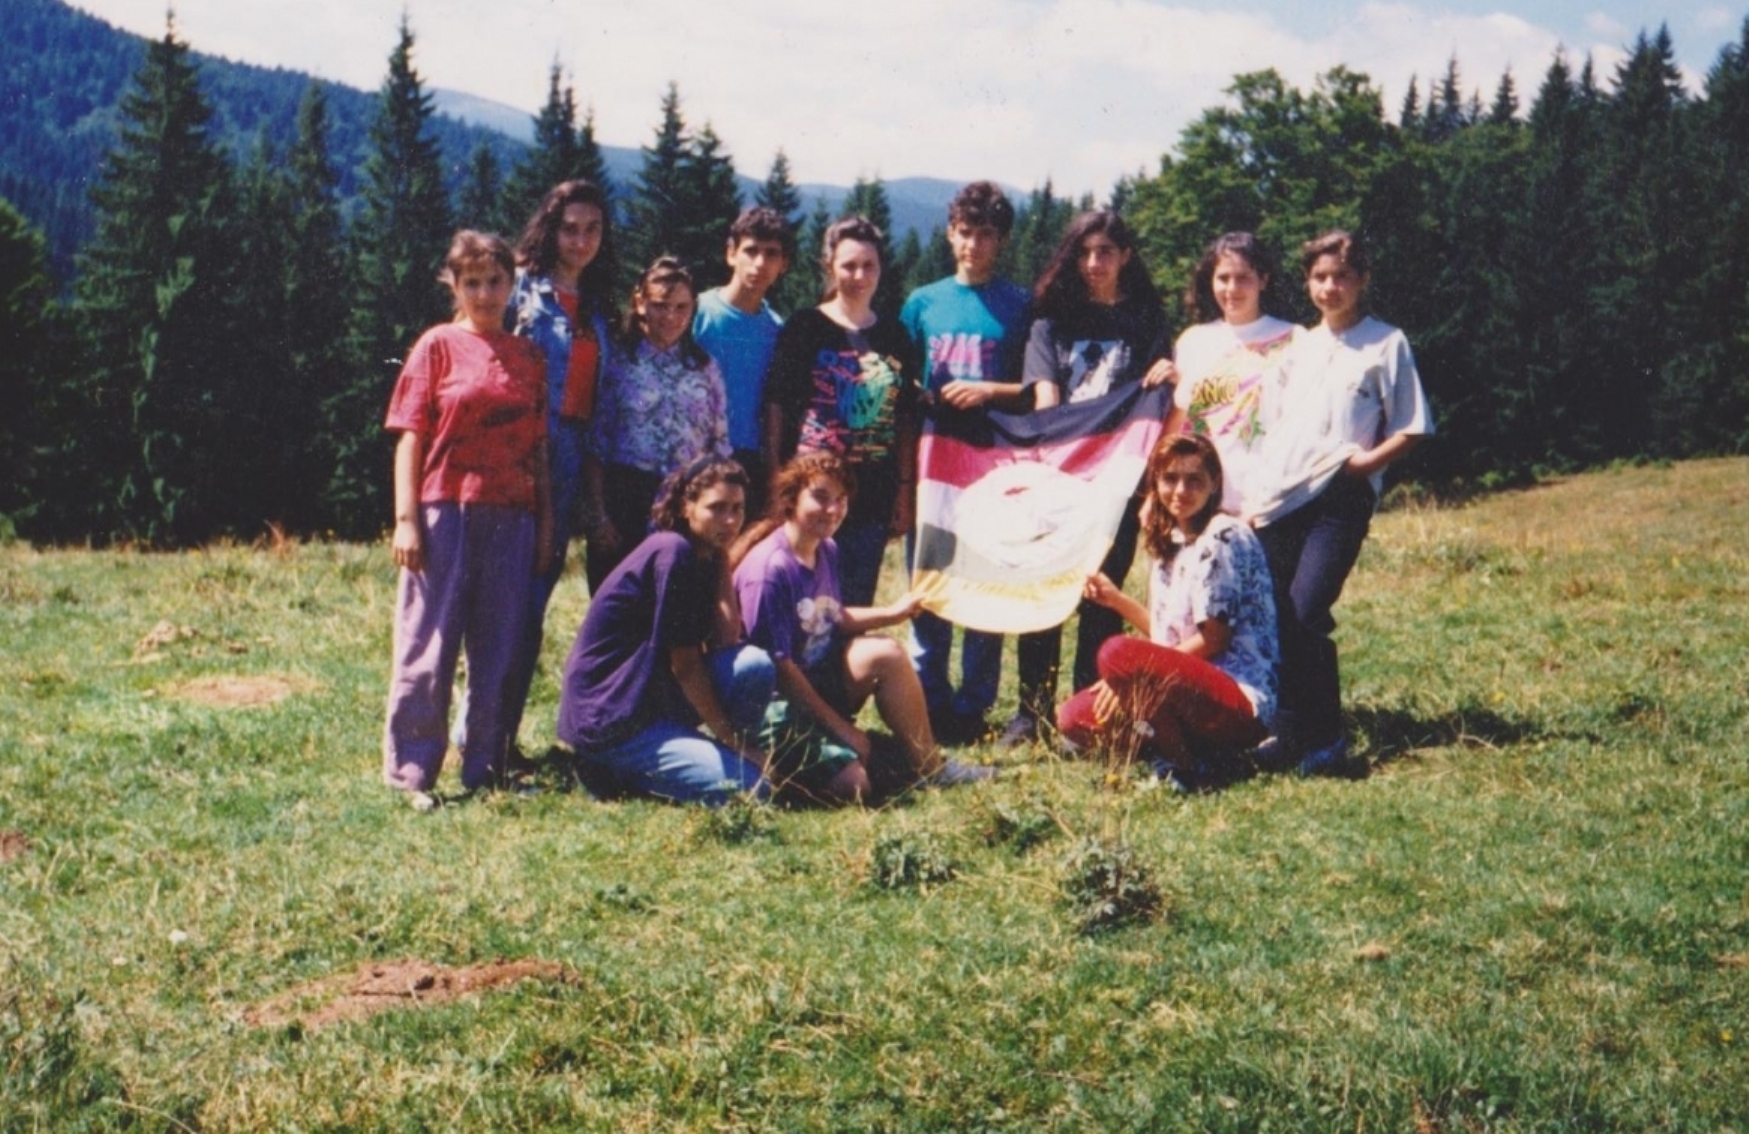 TINERI ADOLESCENTI DIN VECHEA BISERICA CRESTINA DUPA EVANGHELIE DRAGOS VODA IN EXCURSIE LA POIANA SOARELUI IN 1995